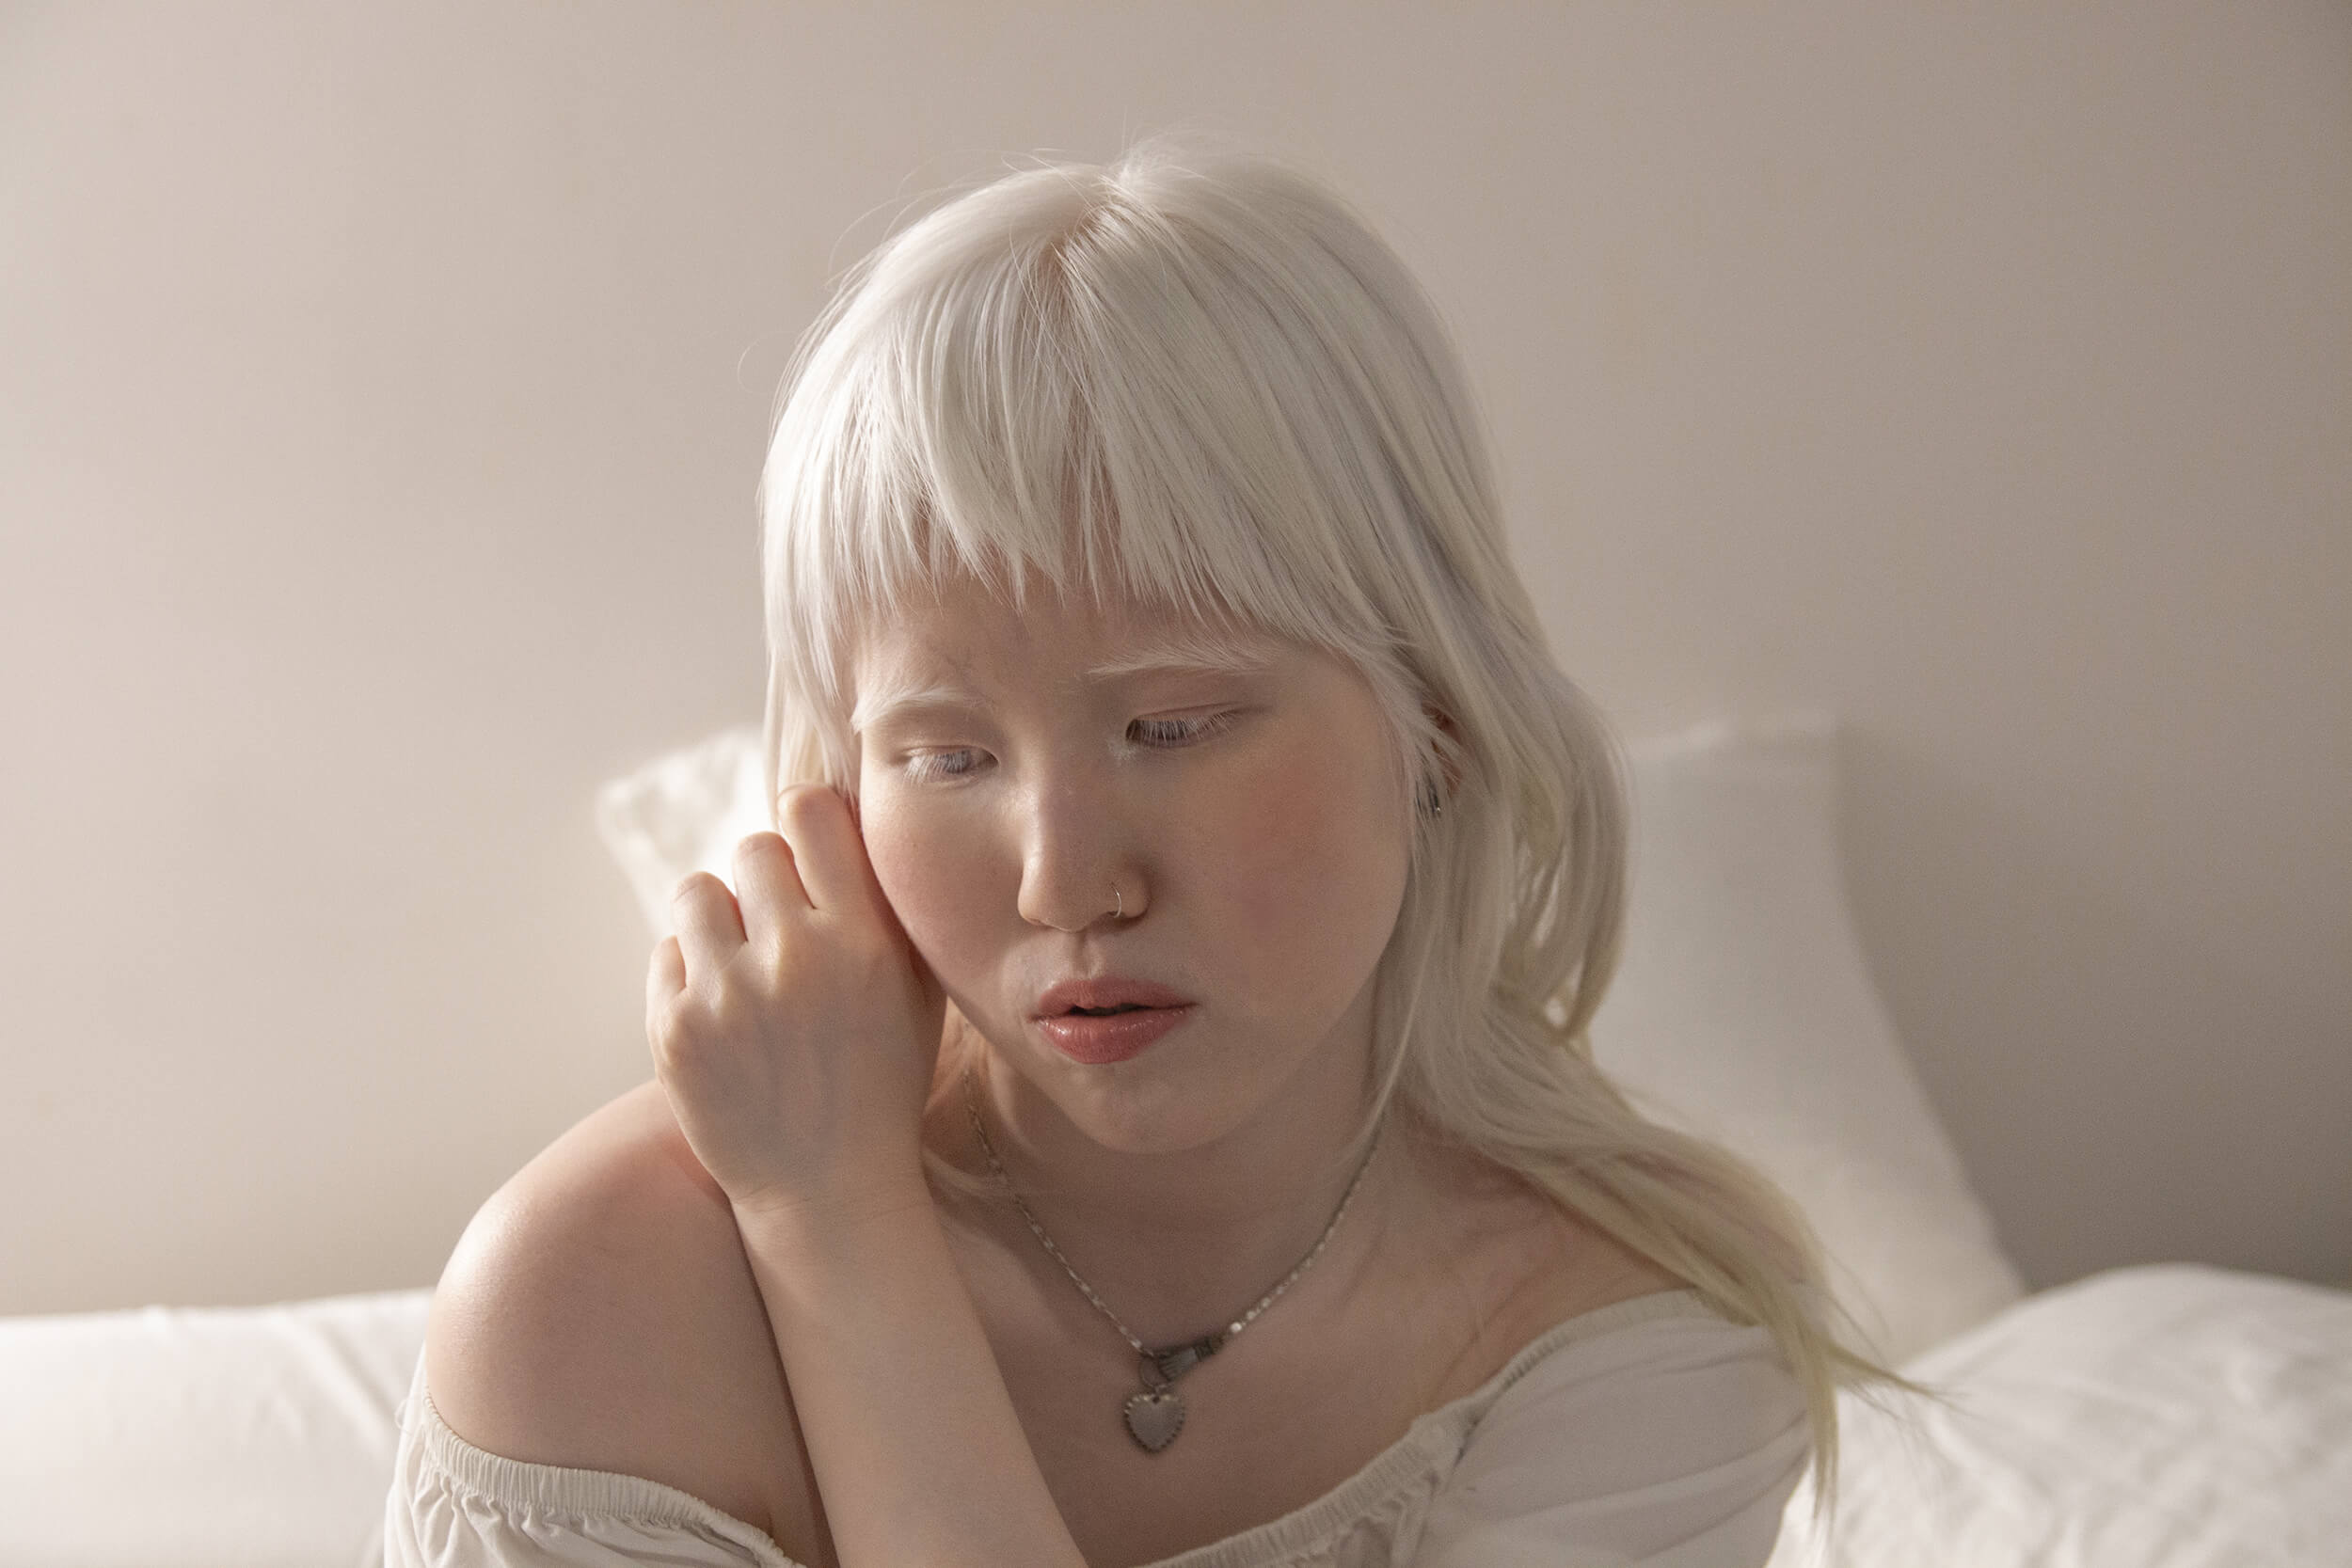 Equals in Diversity Beauty Albinism